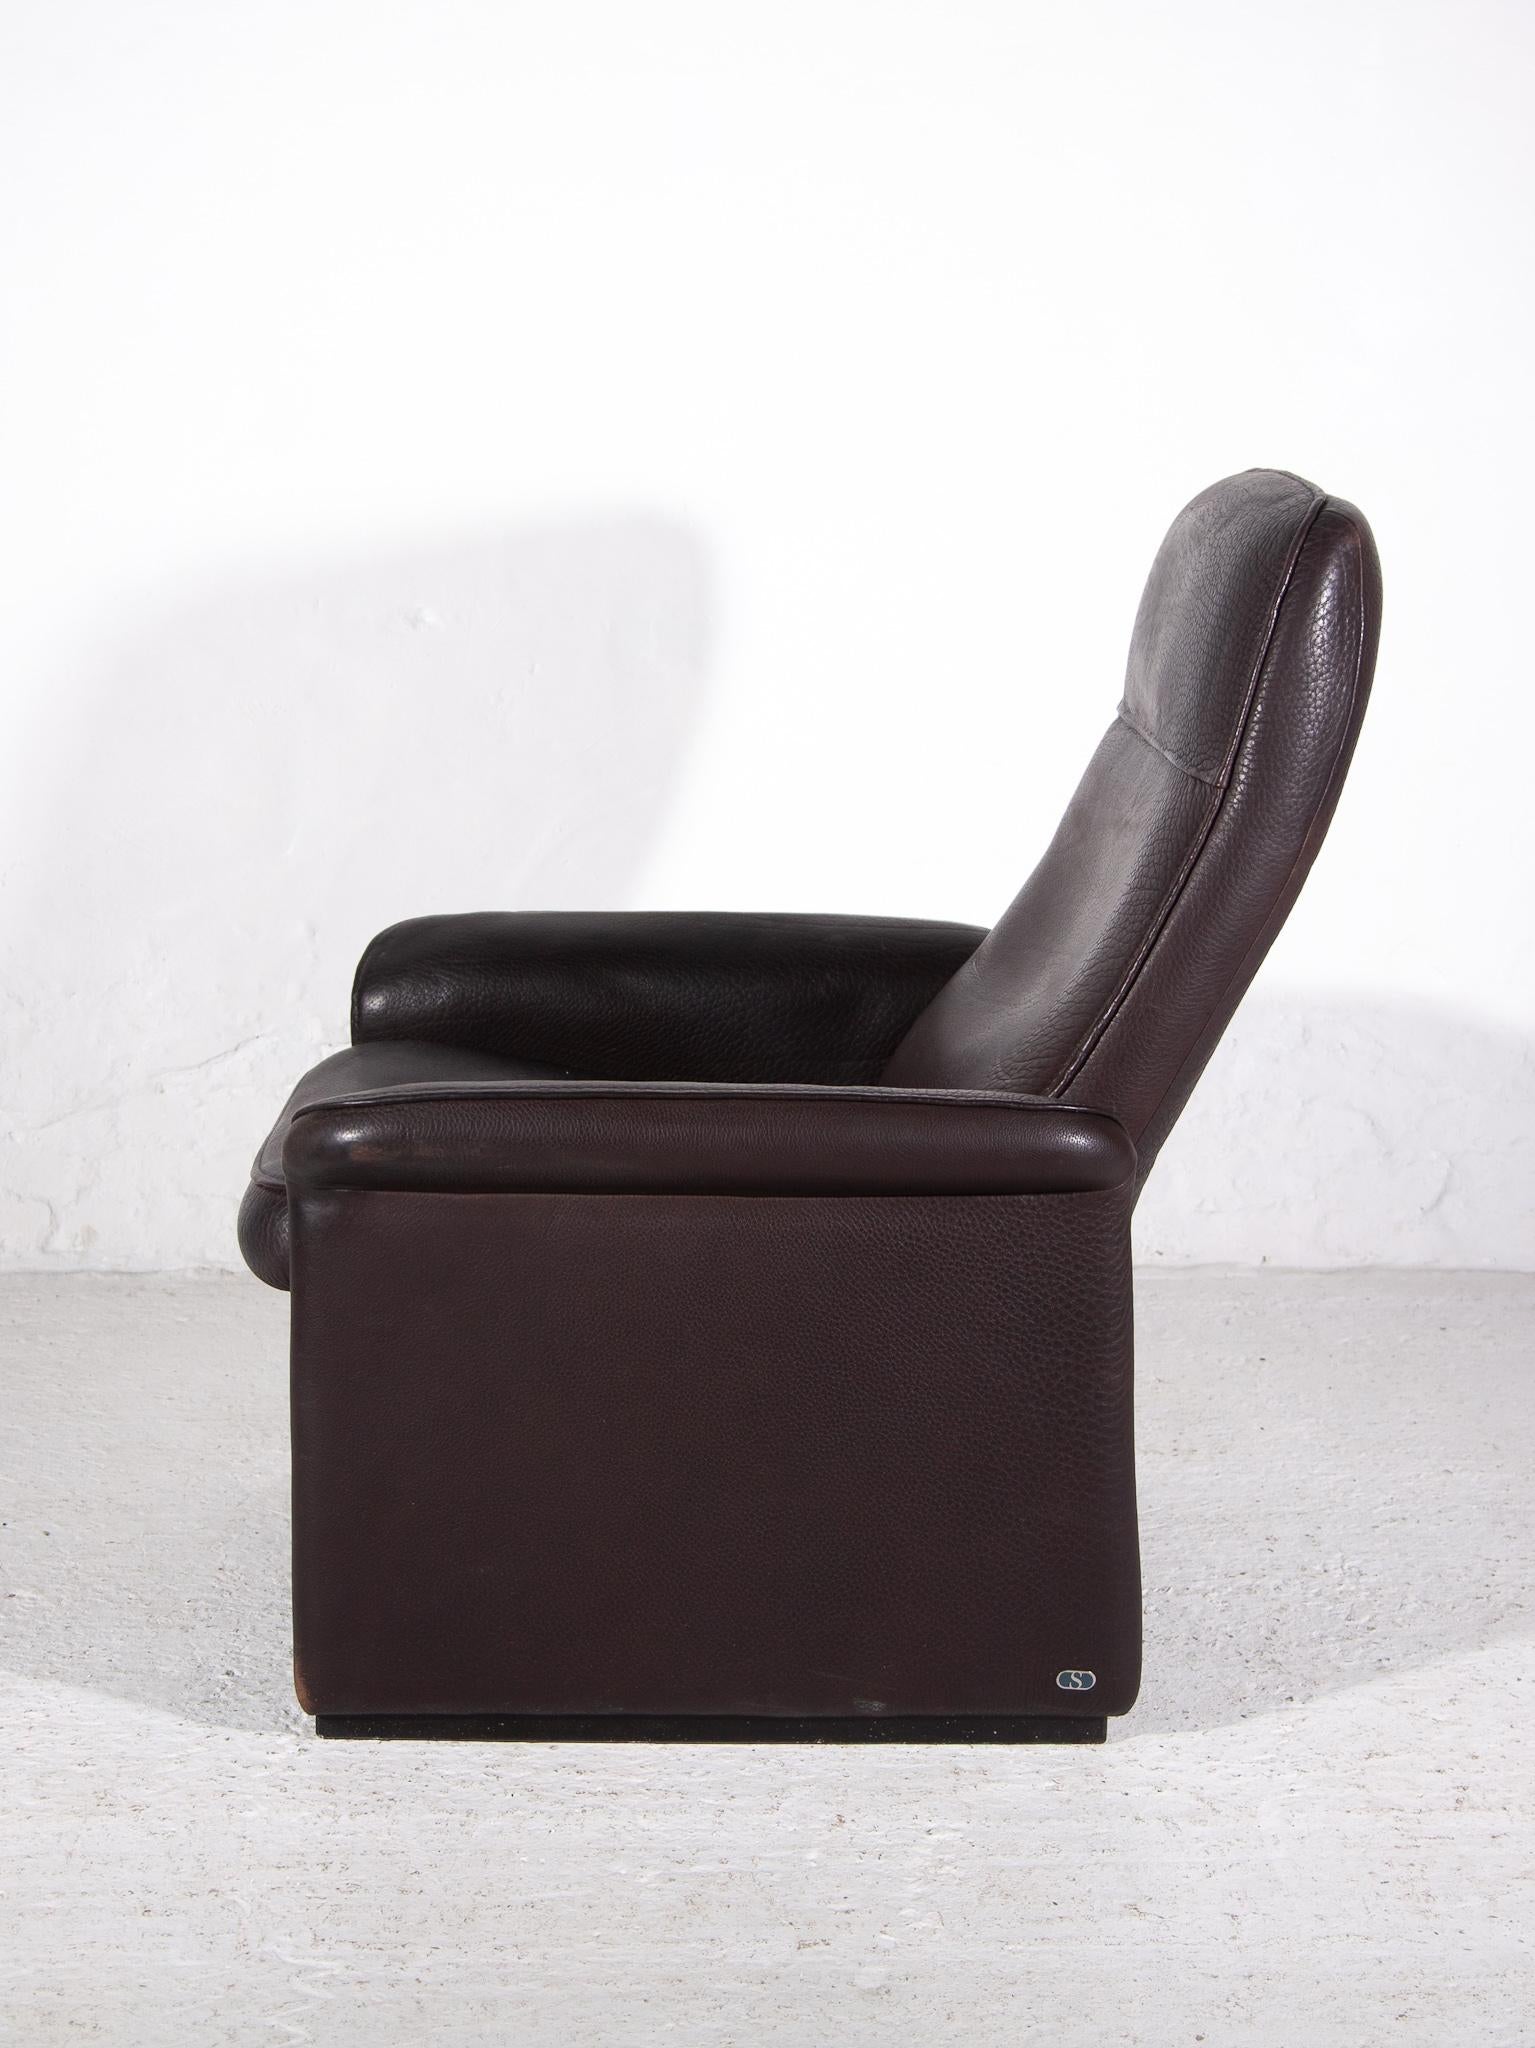 Swiss De Sede Lounge Recliner Chair DS-50 Fauteuil, 1970s For Sale